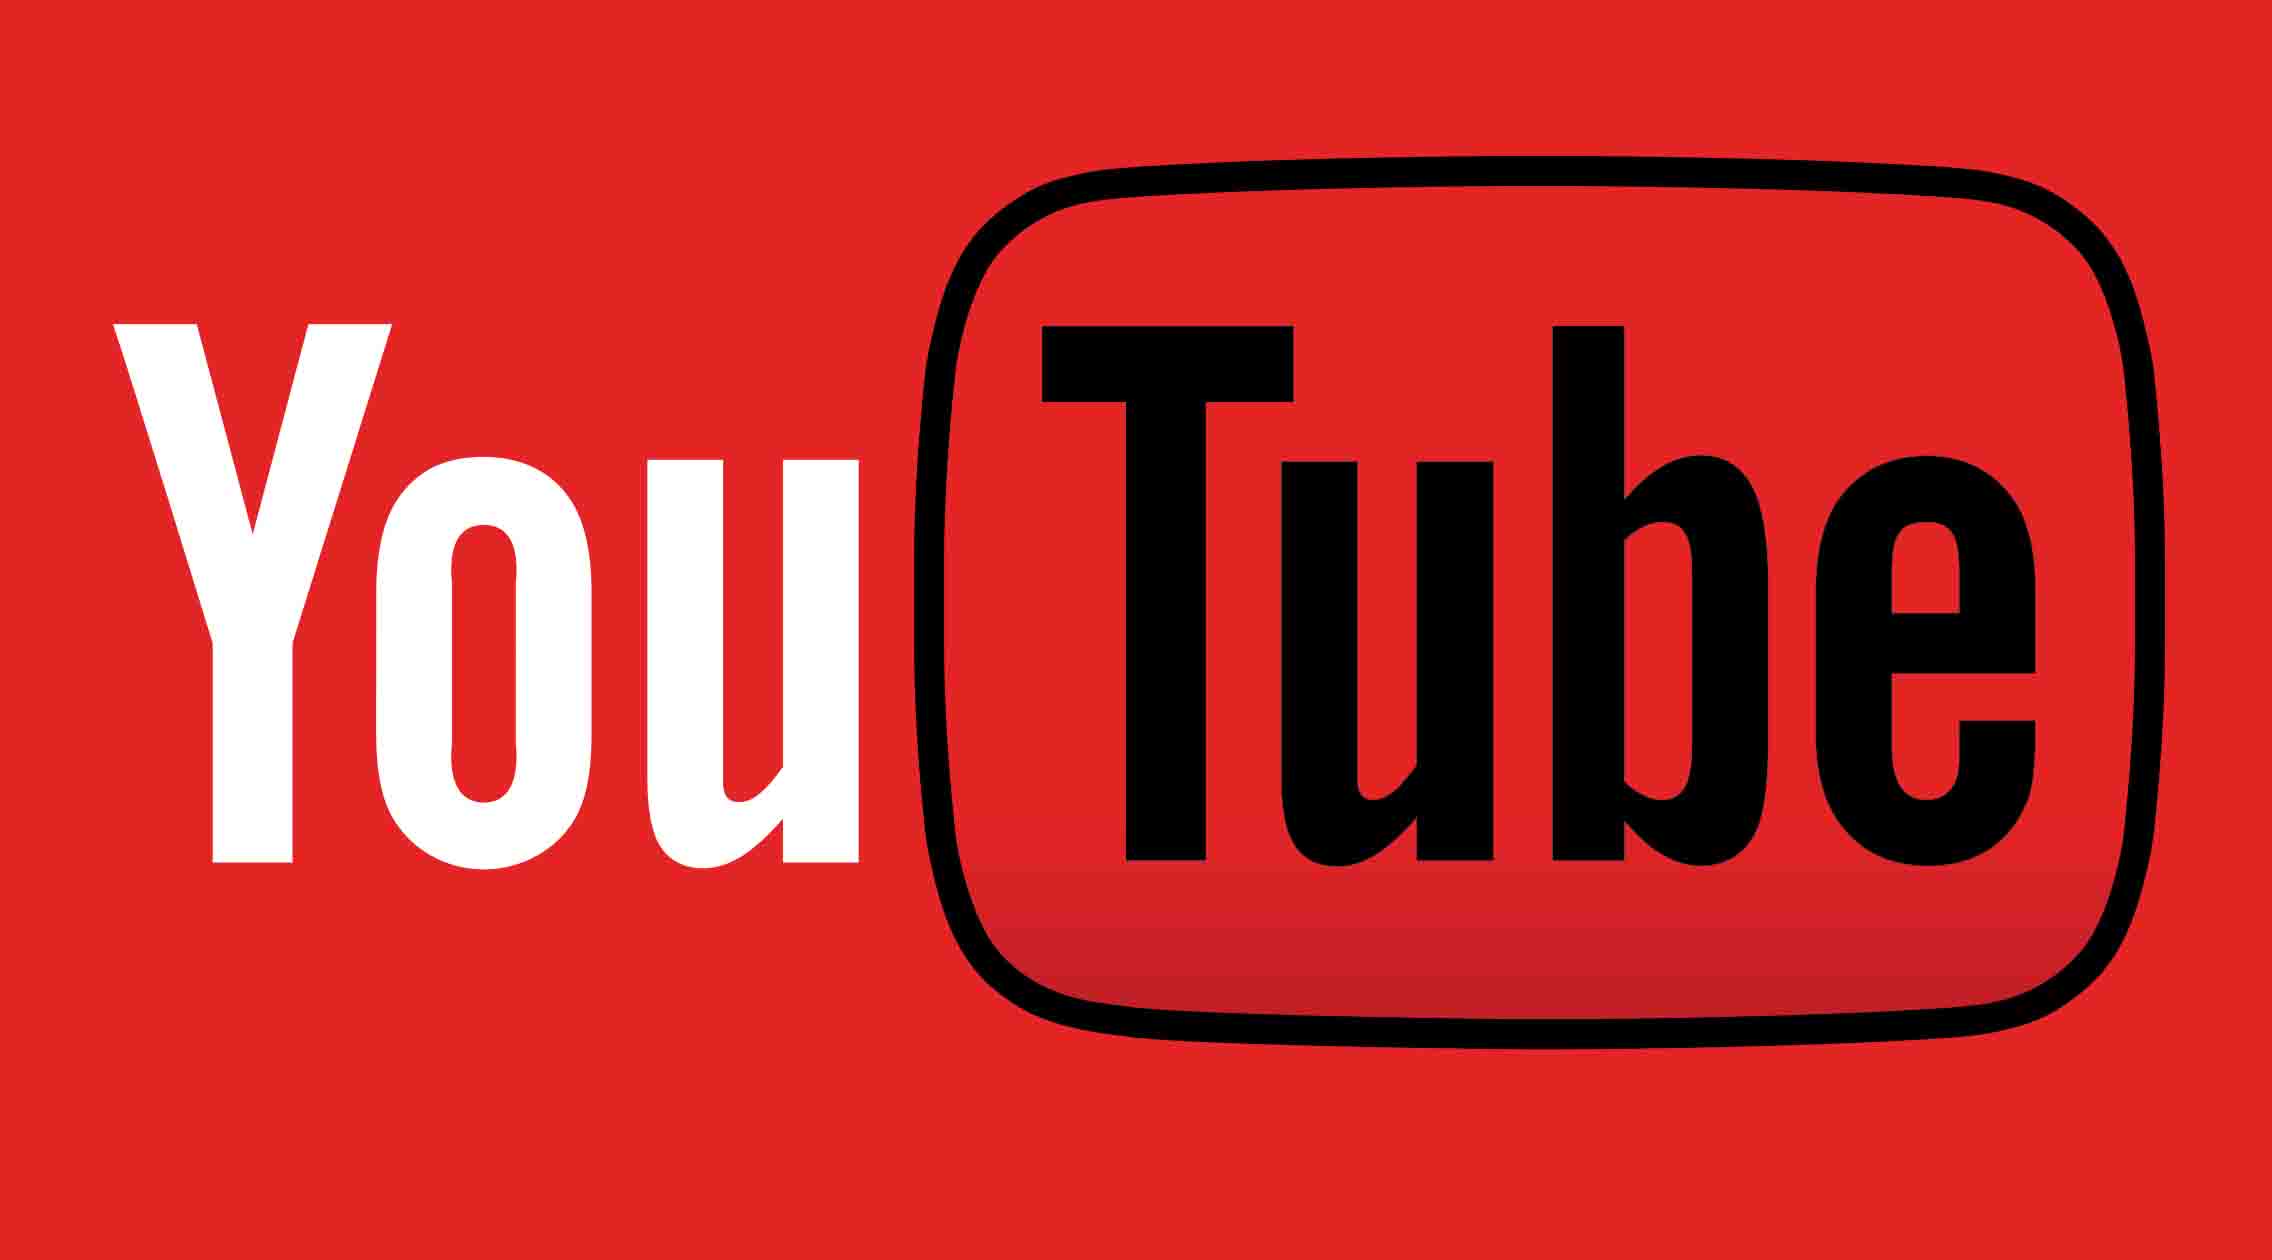 YouTube Logo Red